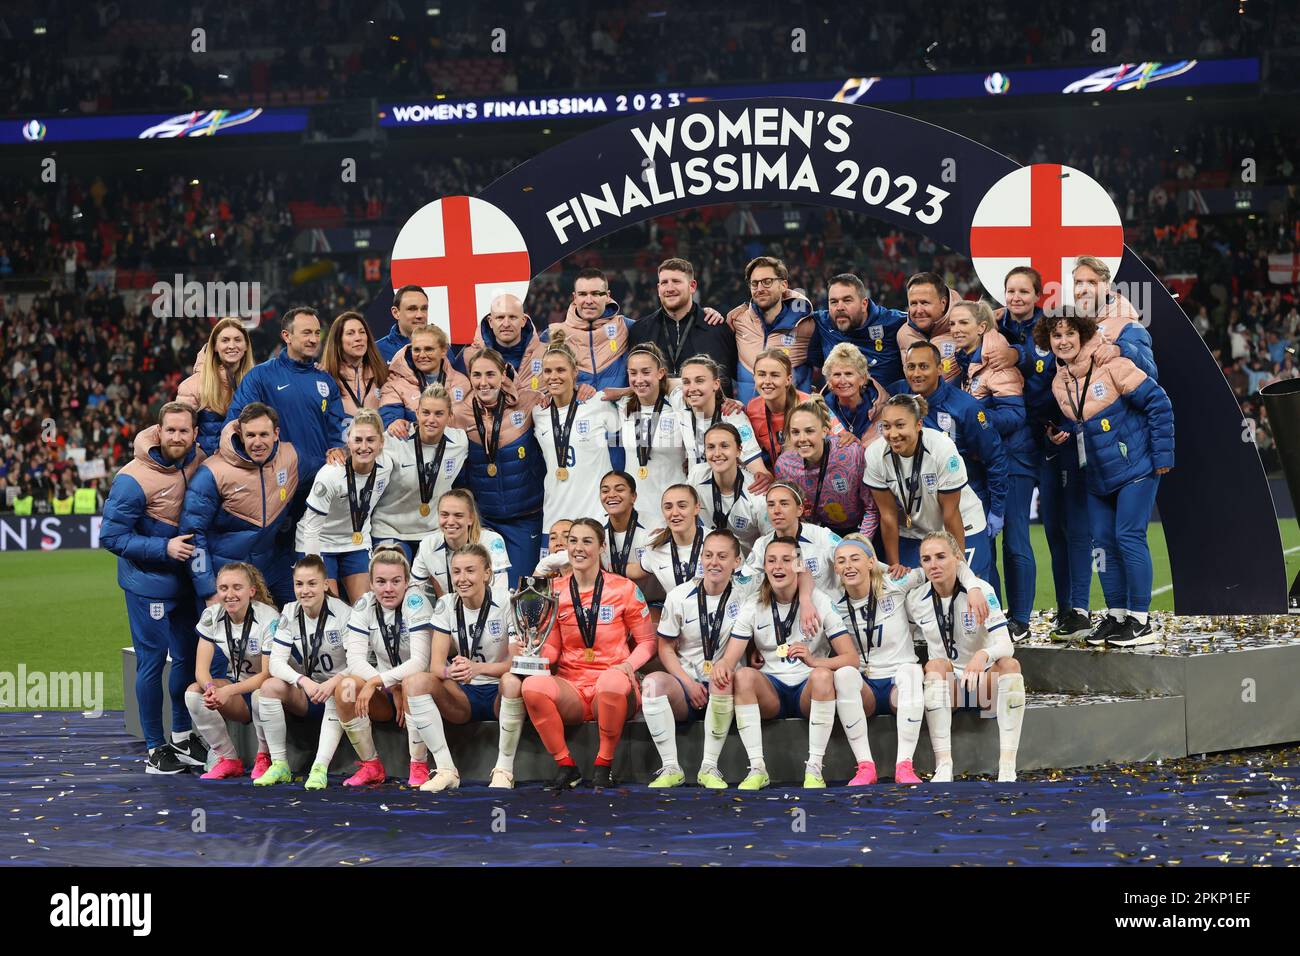 The England team celebrate at the England v Brazil UEFA Women's Finalissima 2023 match at Wembley Stadium, London, UK on 6th April, 2023. Stock Photo